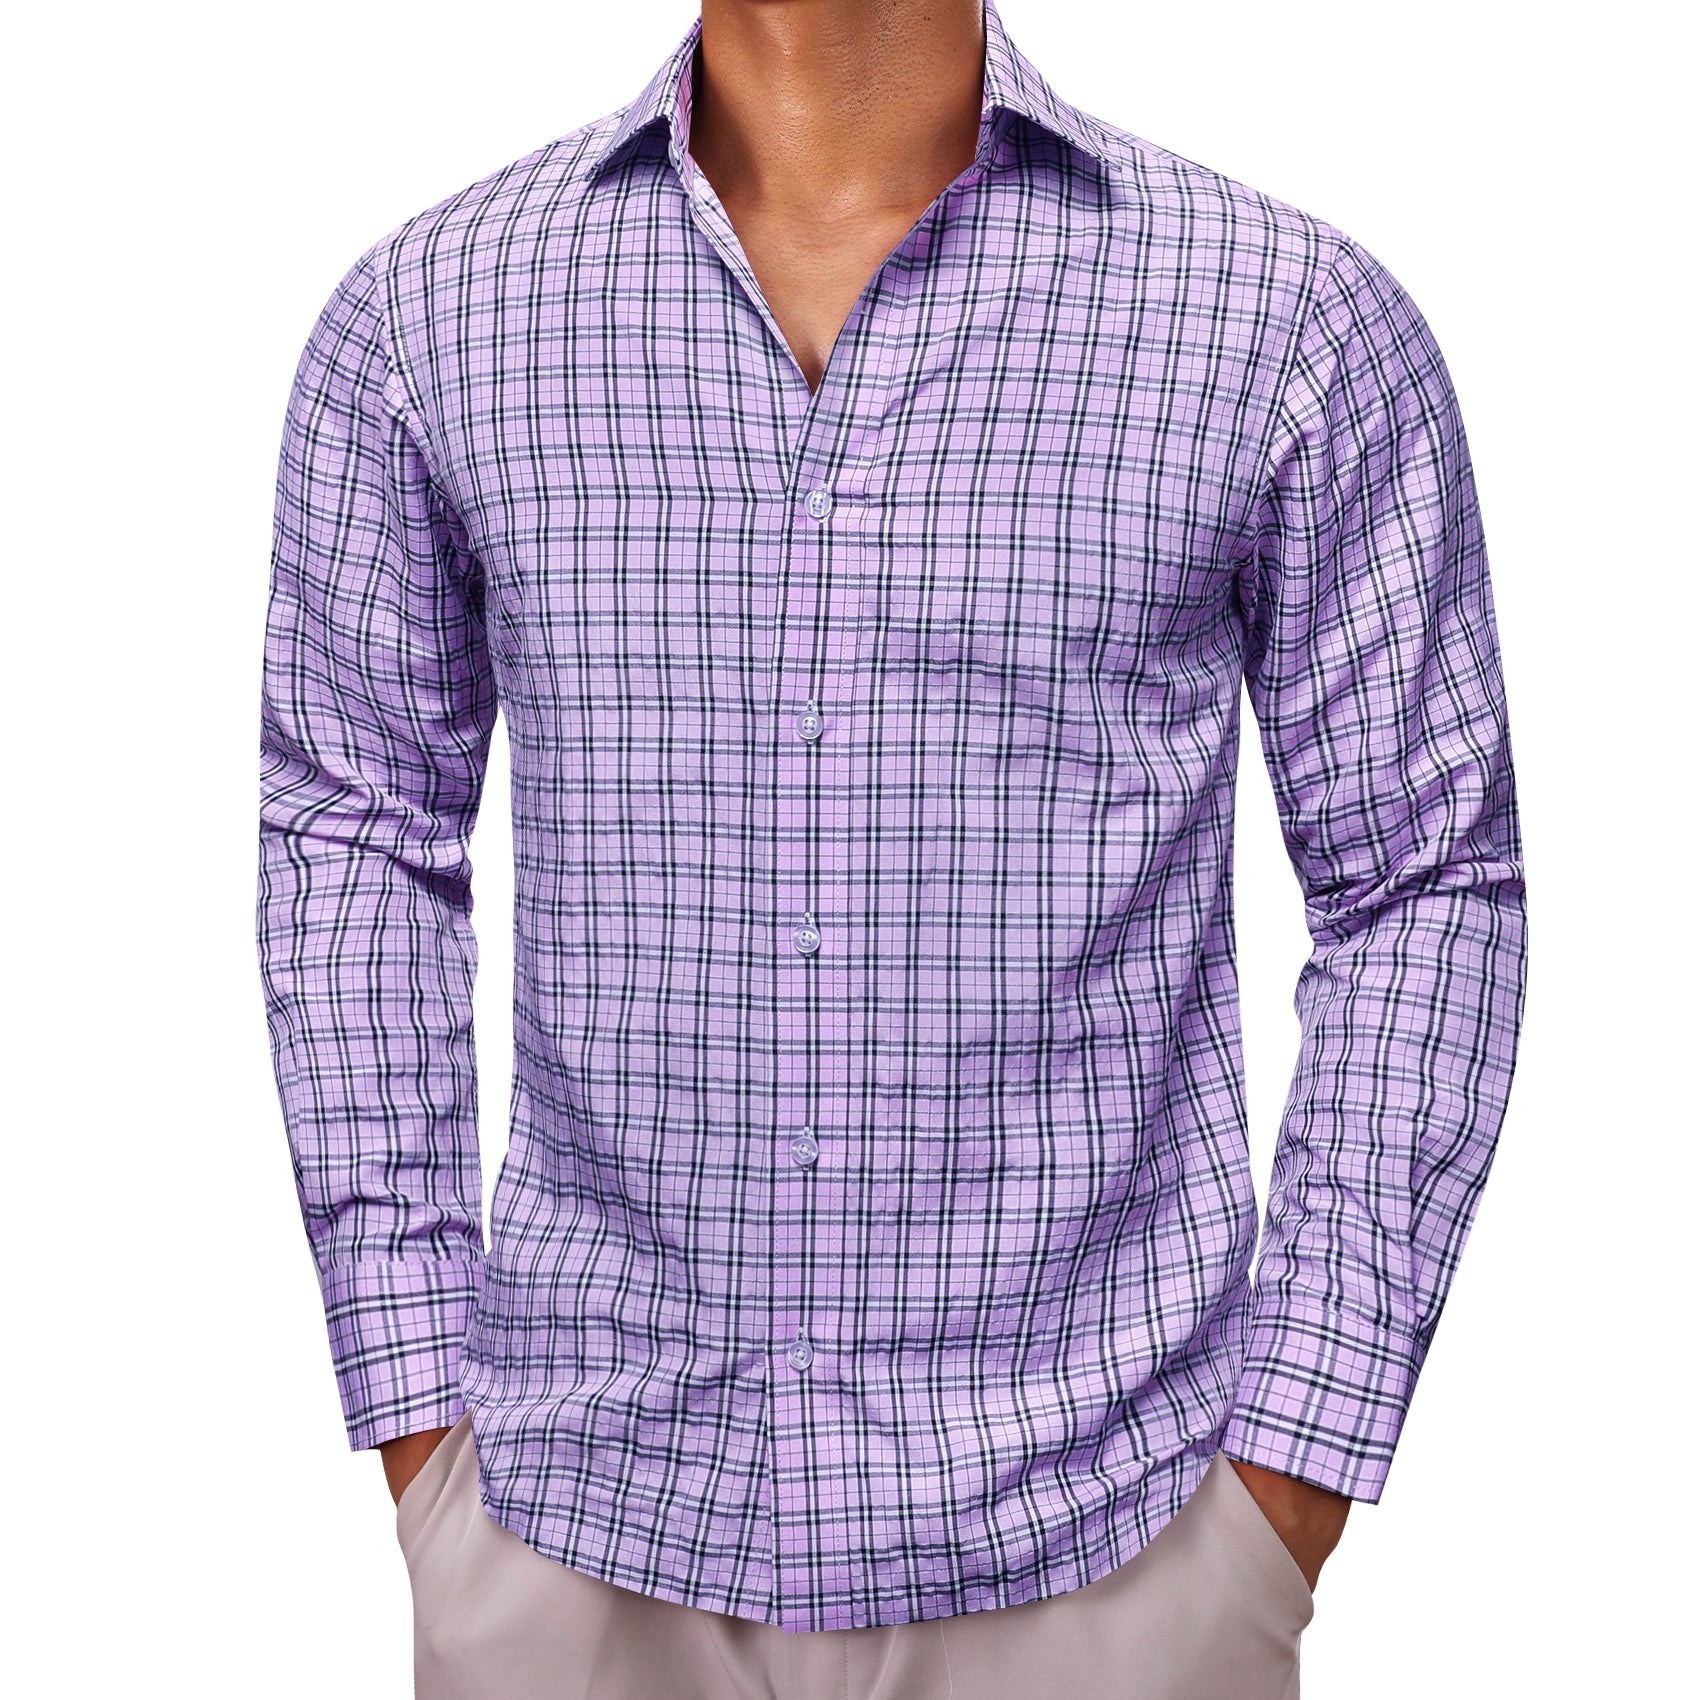 Barry.wang Purple Plaid Men's Shirt